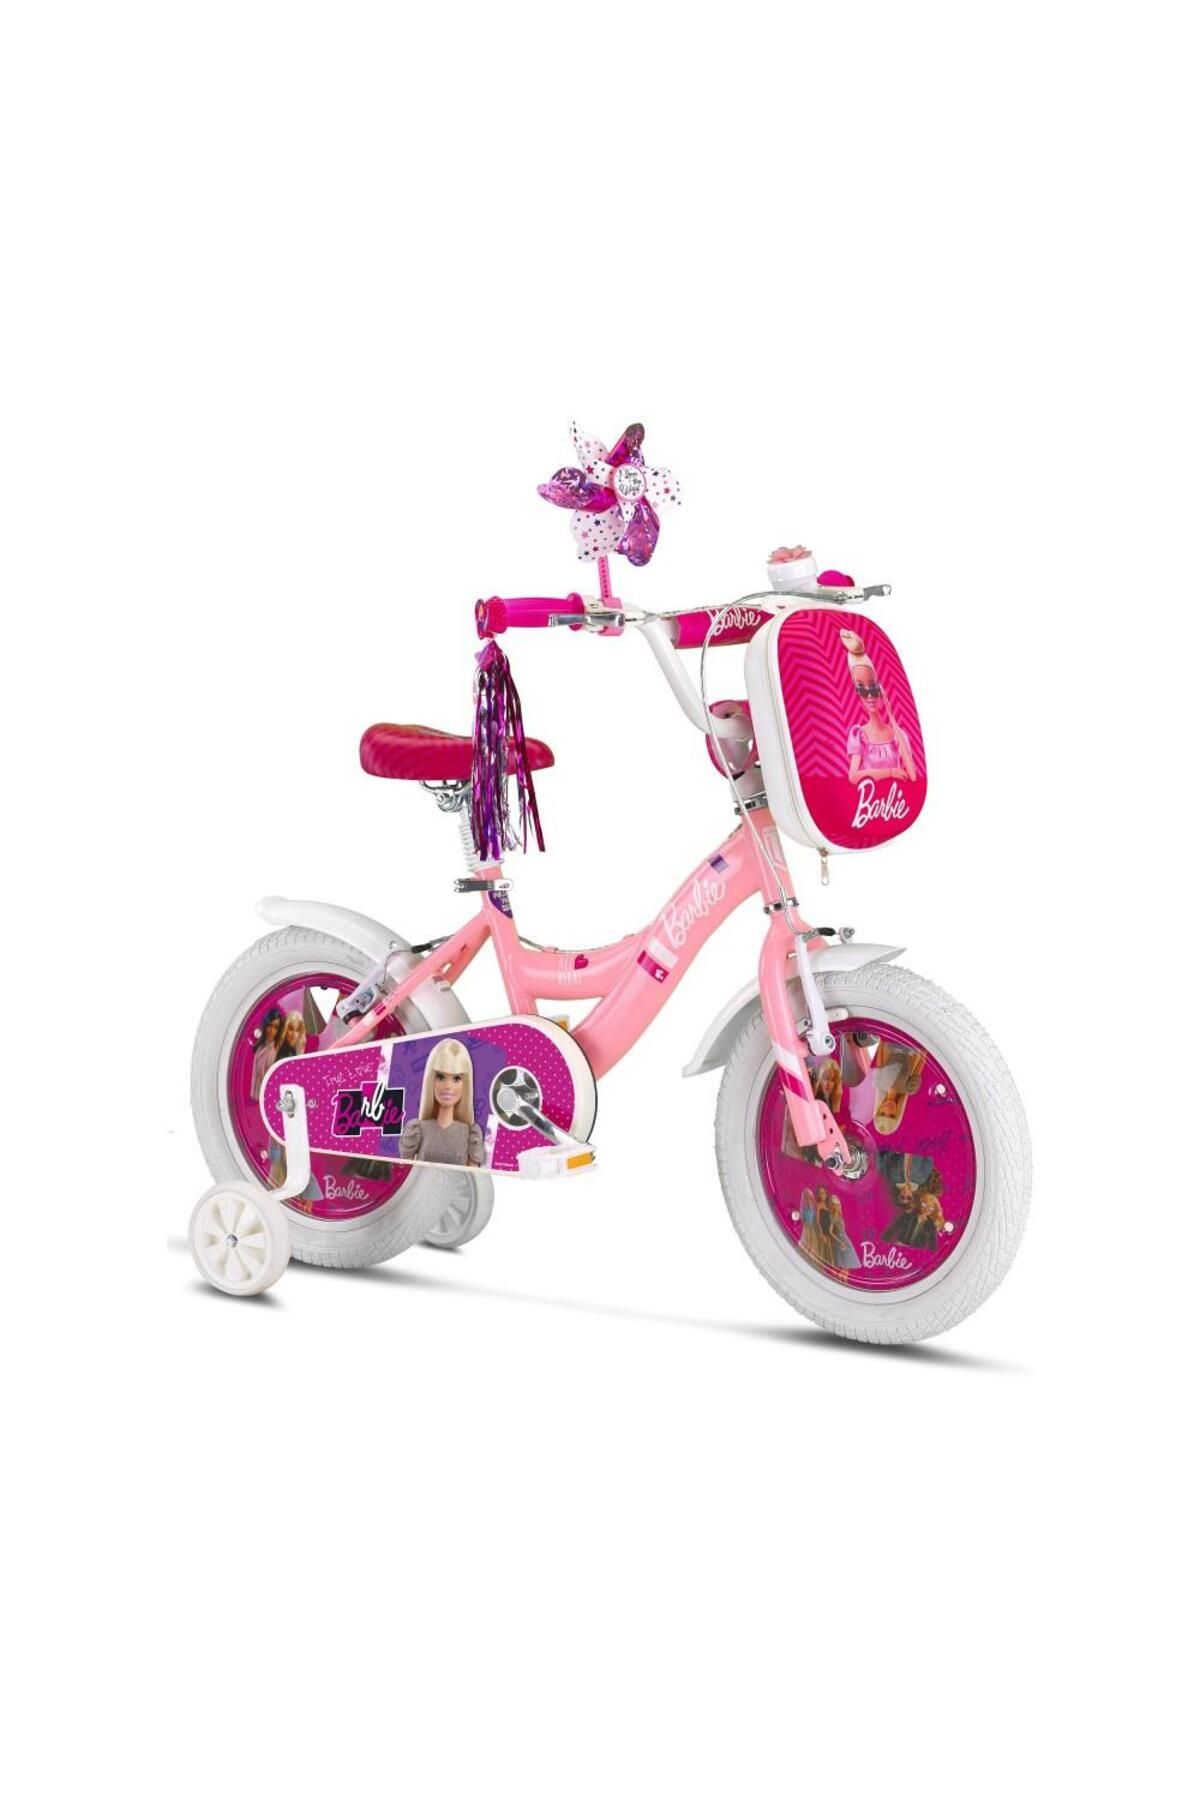 Ümit Barbie 16 Jant Kız Çocuk Bisikleti 1643 (100-120 cm Boy)